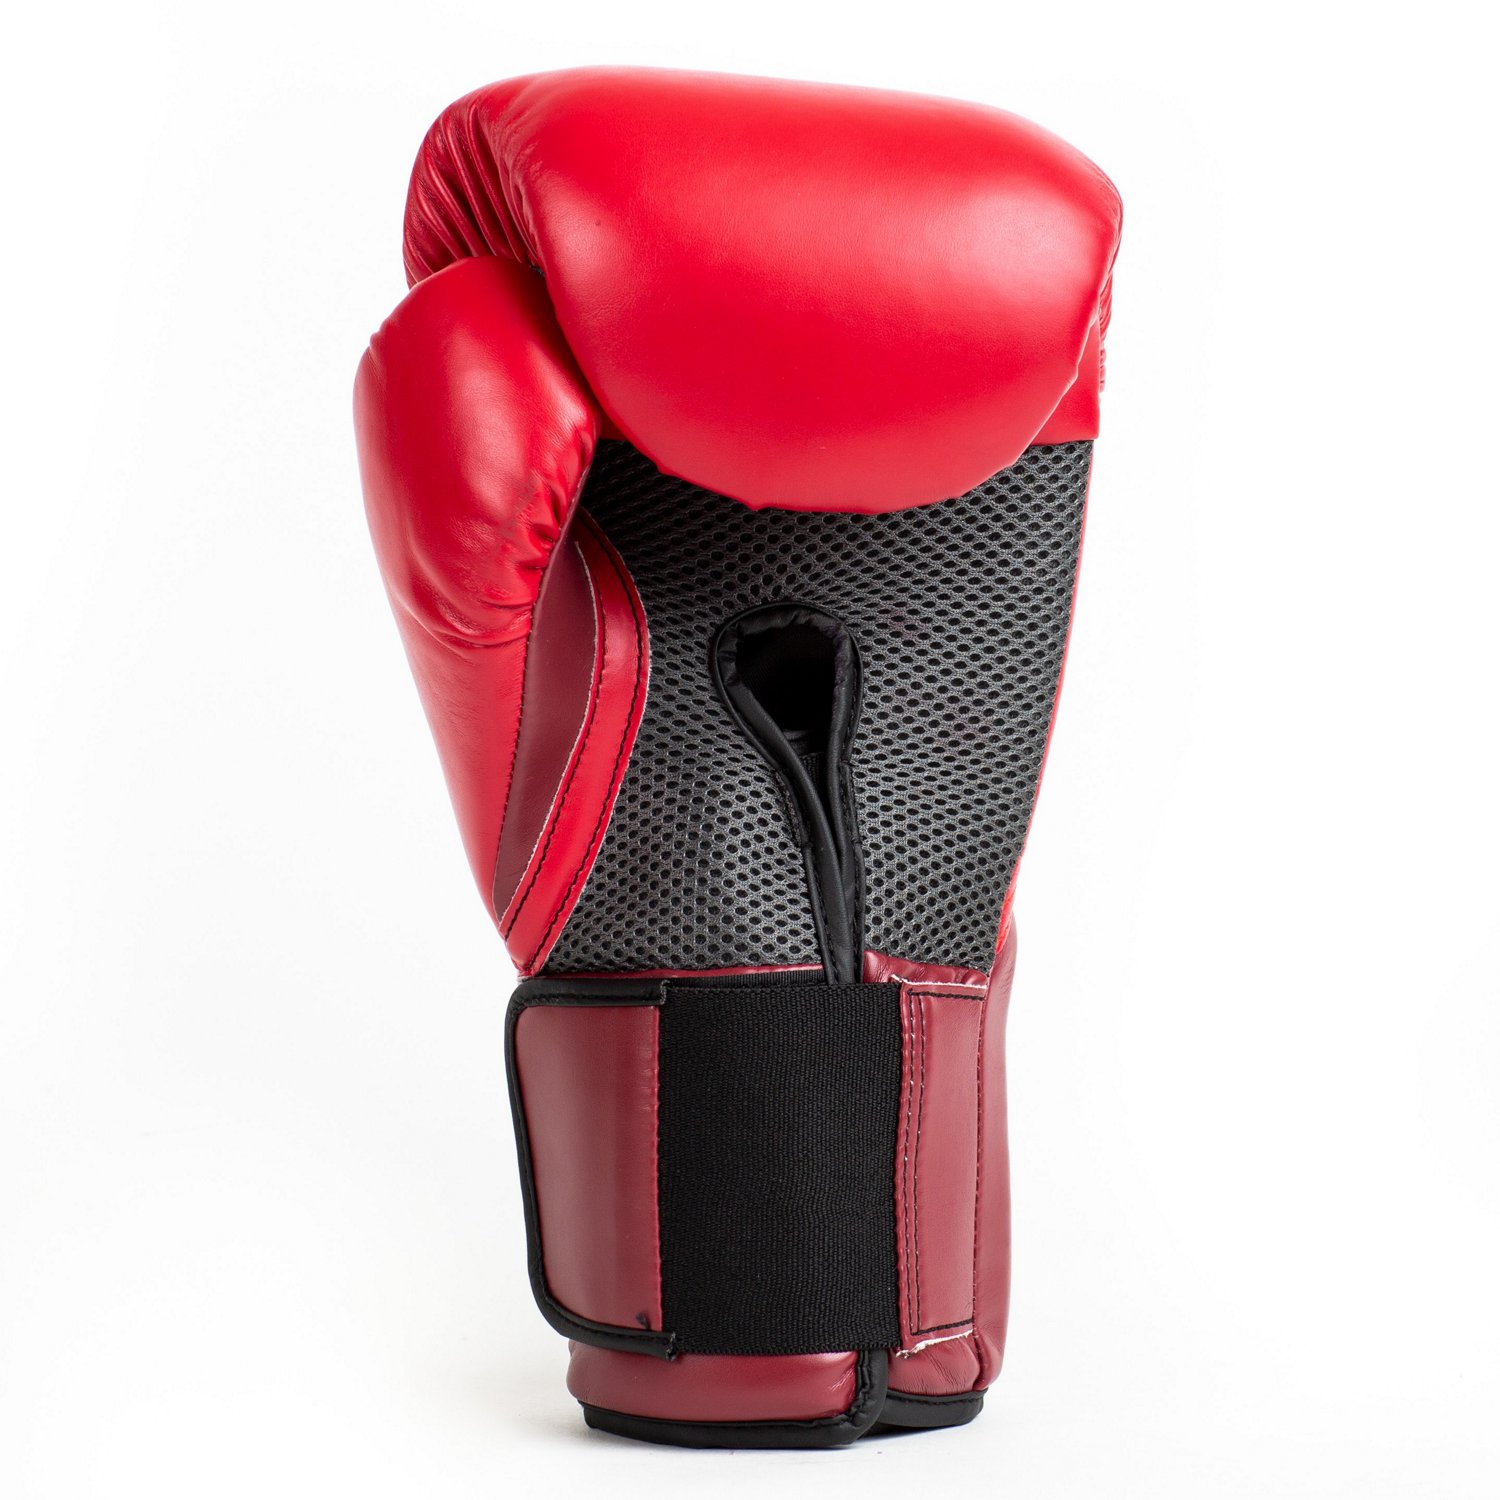 Elite ProStyle Training Boxing Gloves for Women, Sparring, Heavy